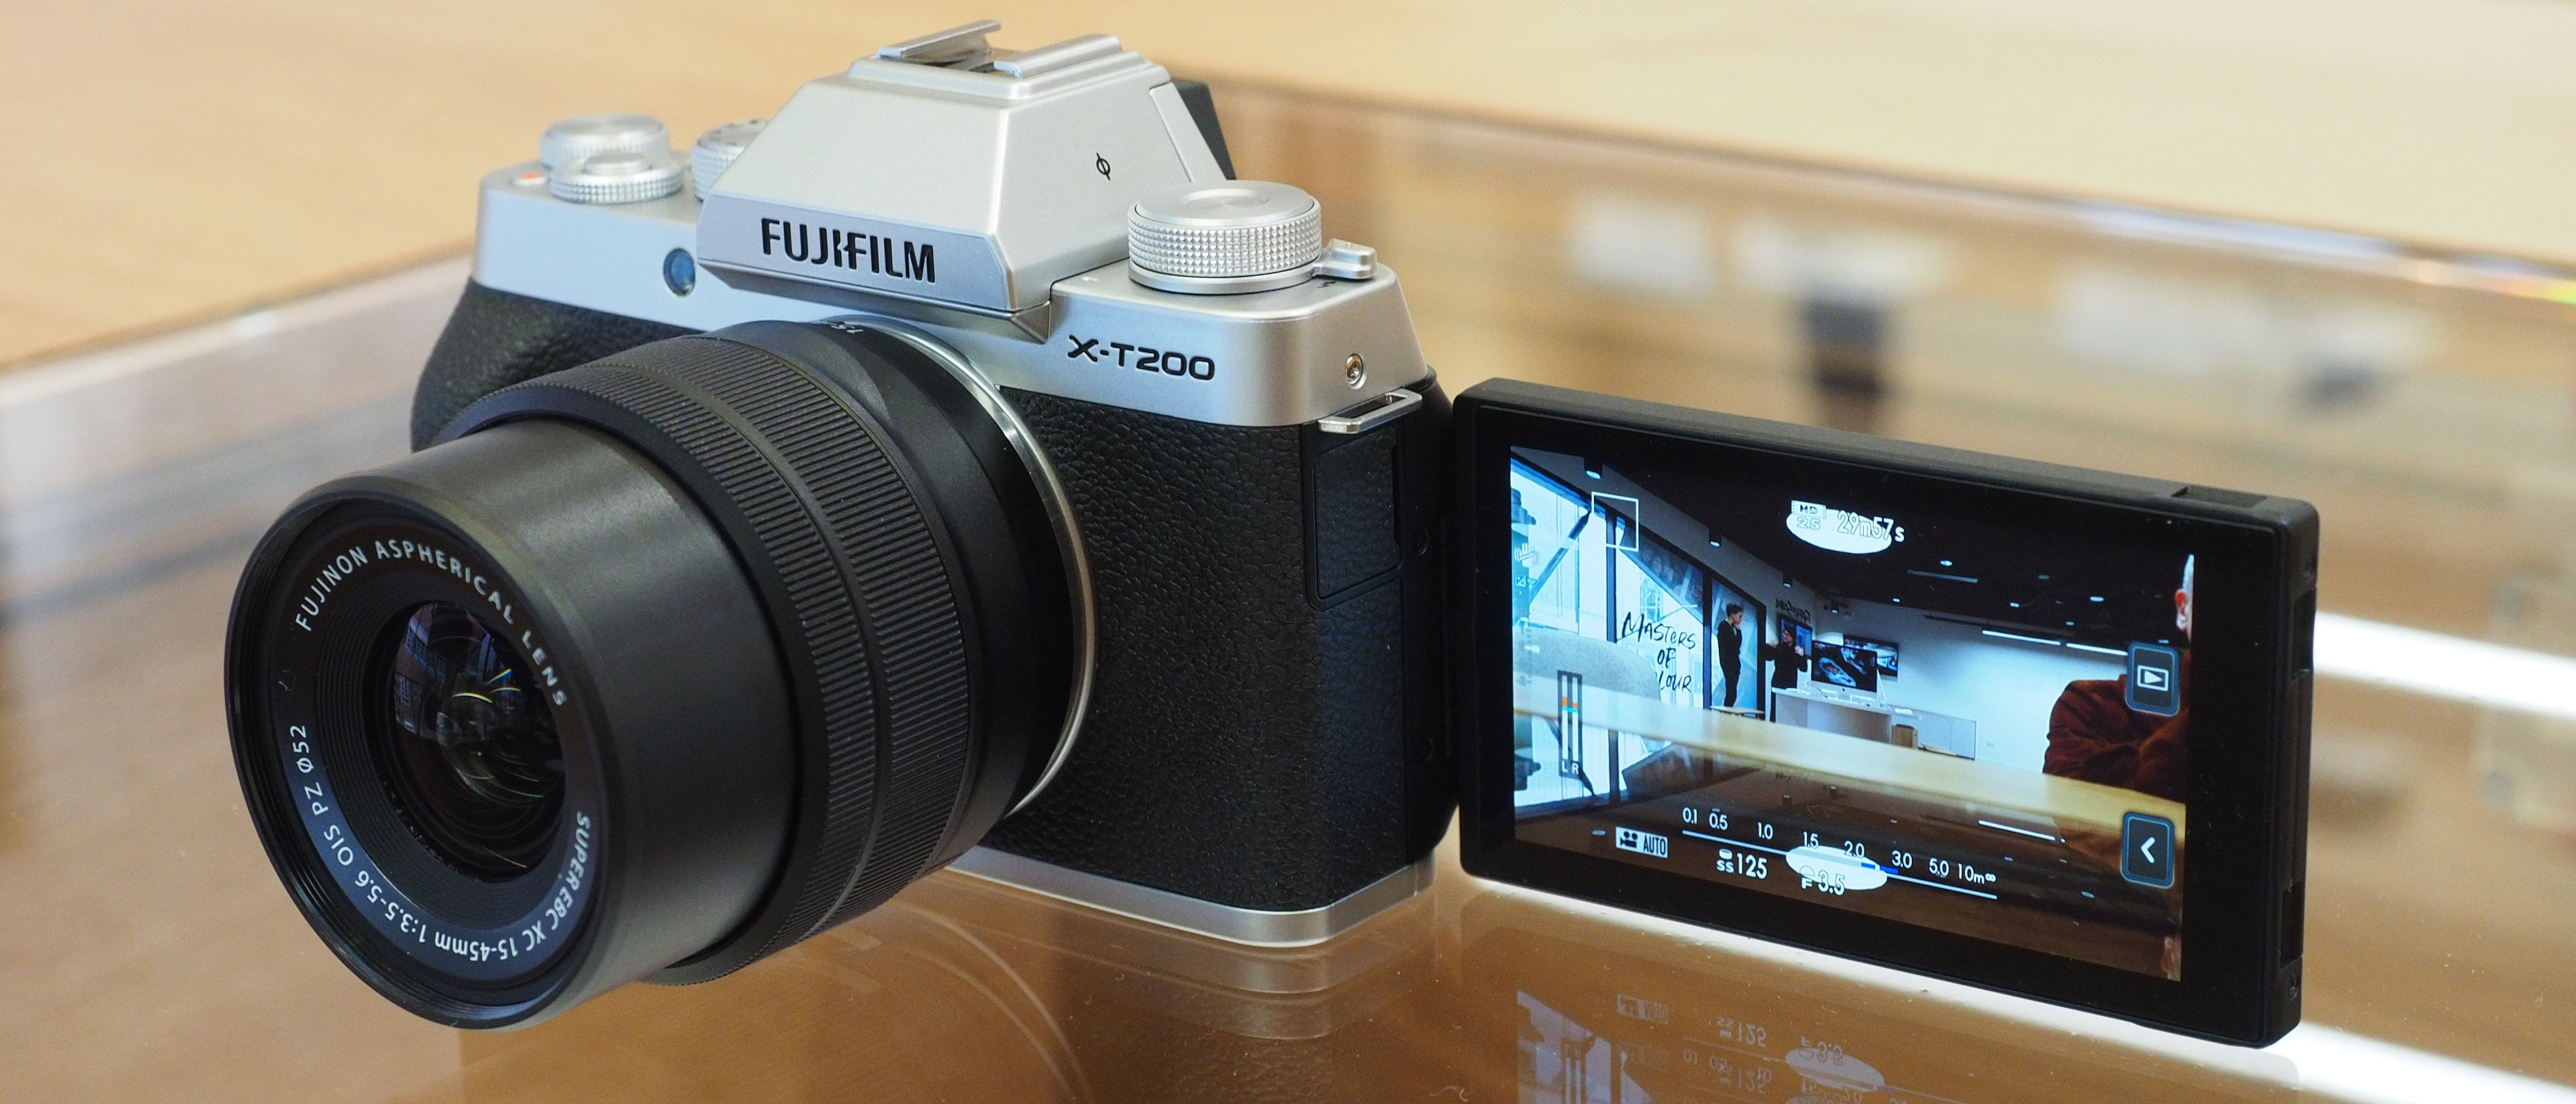 Fujifilm X-T200 review | Digital Camera World